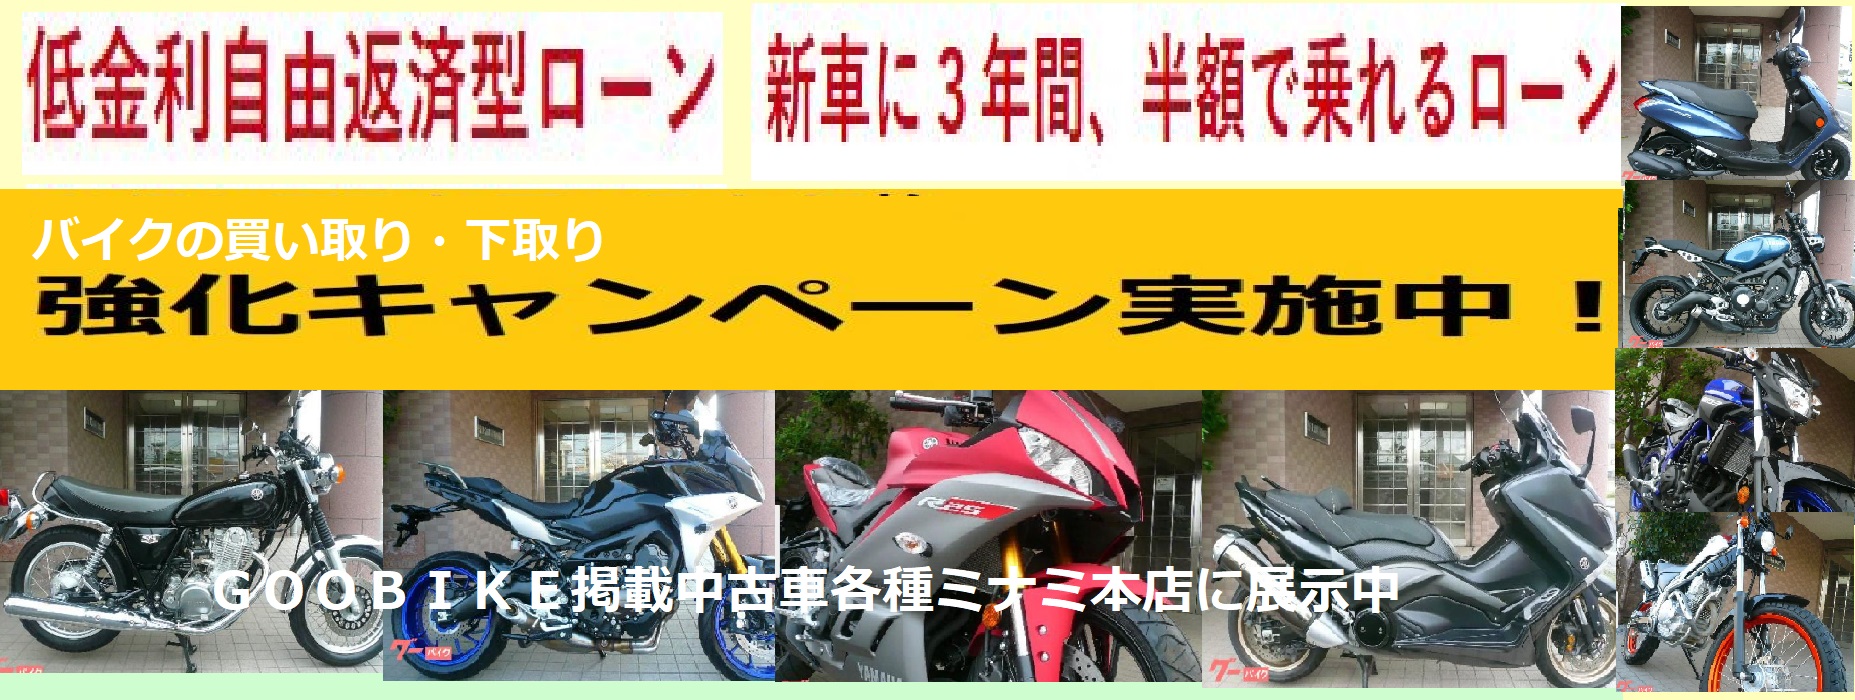 Ysp所沢 ヤマハ Yamaha ミナミ商会グループが運営するバイク Bike Motorcycle の専門店